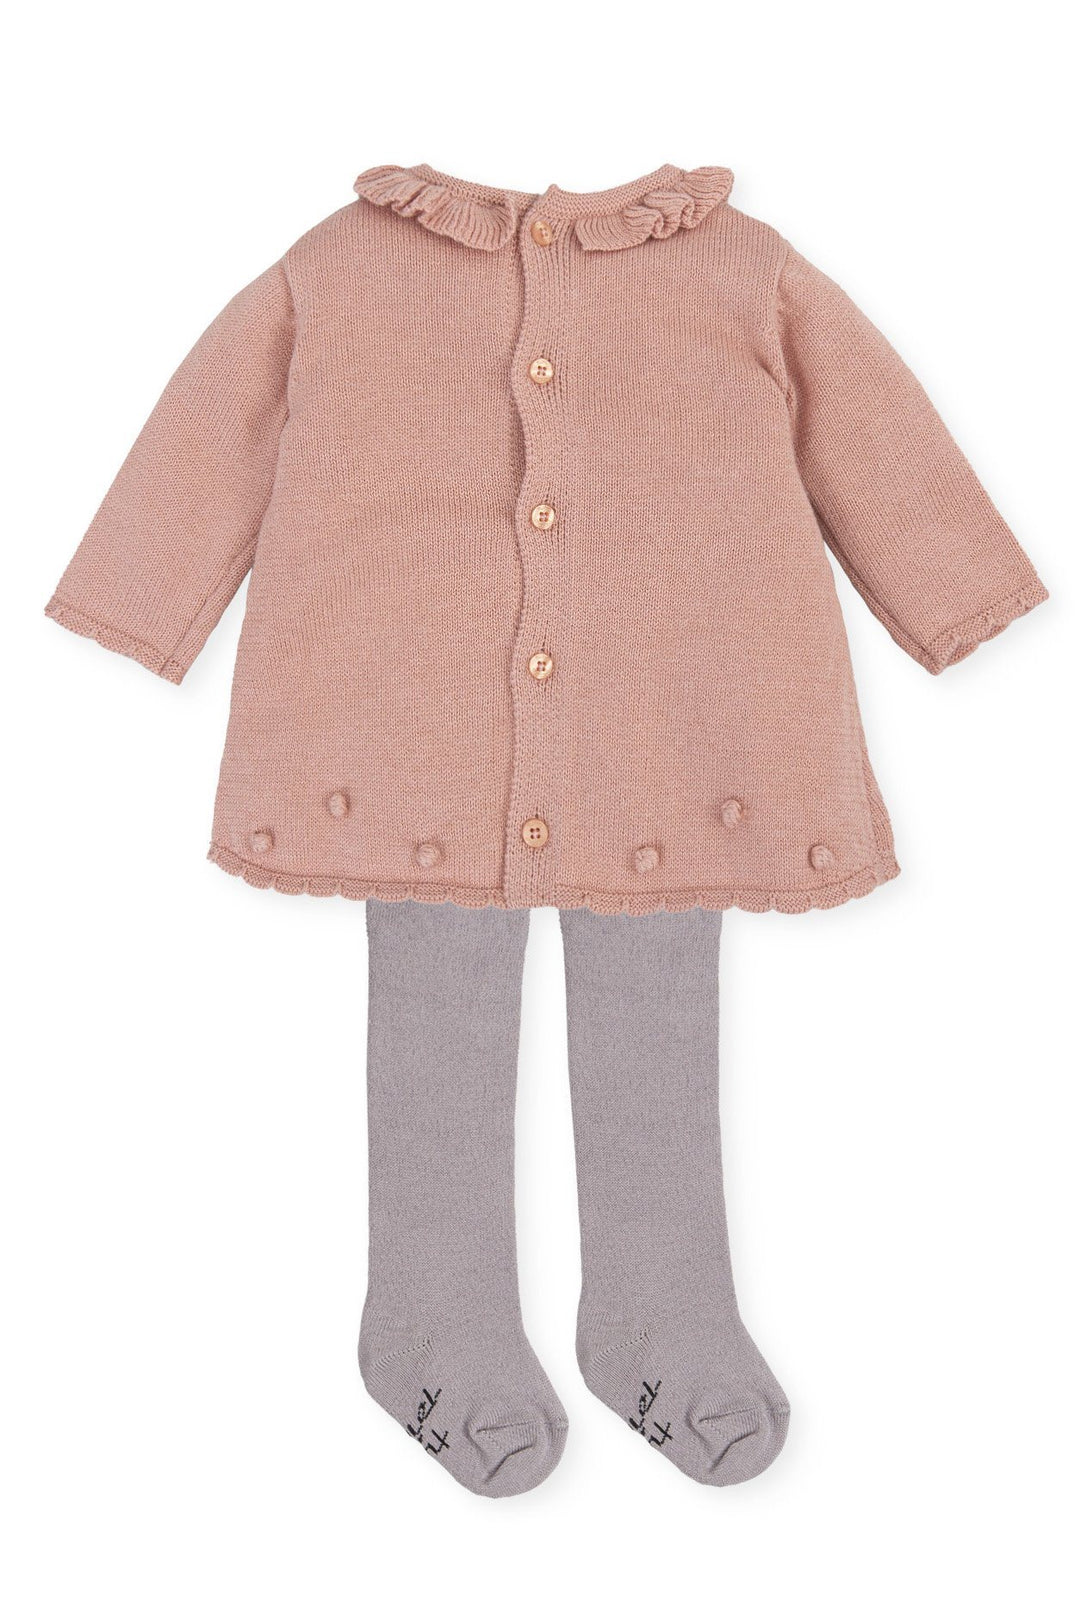 Tutto Piccolo "Samara" Petal Pink Knitted Dress & Tights | Millie and John